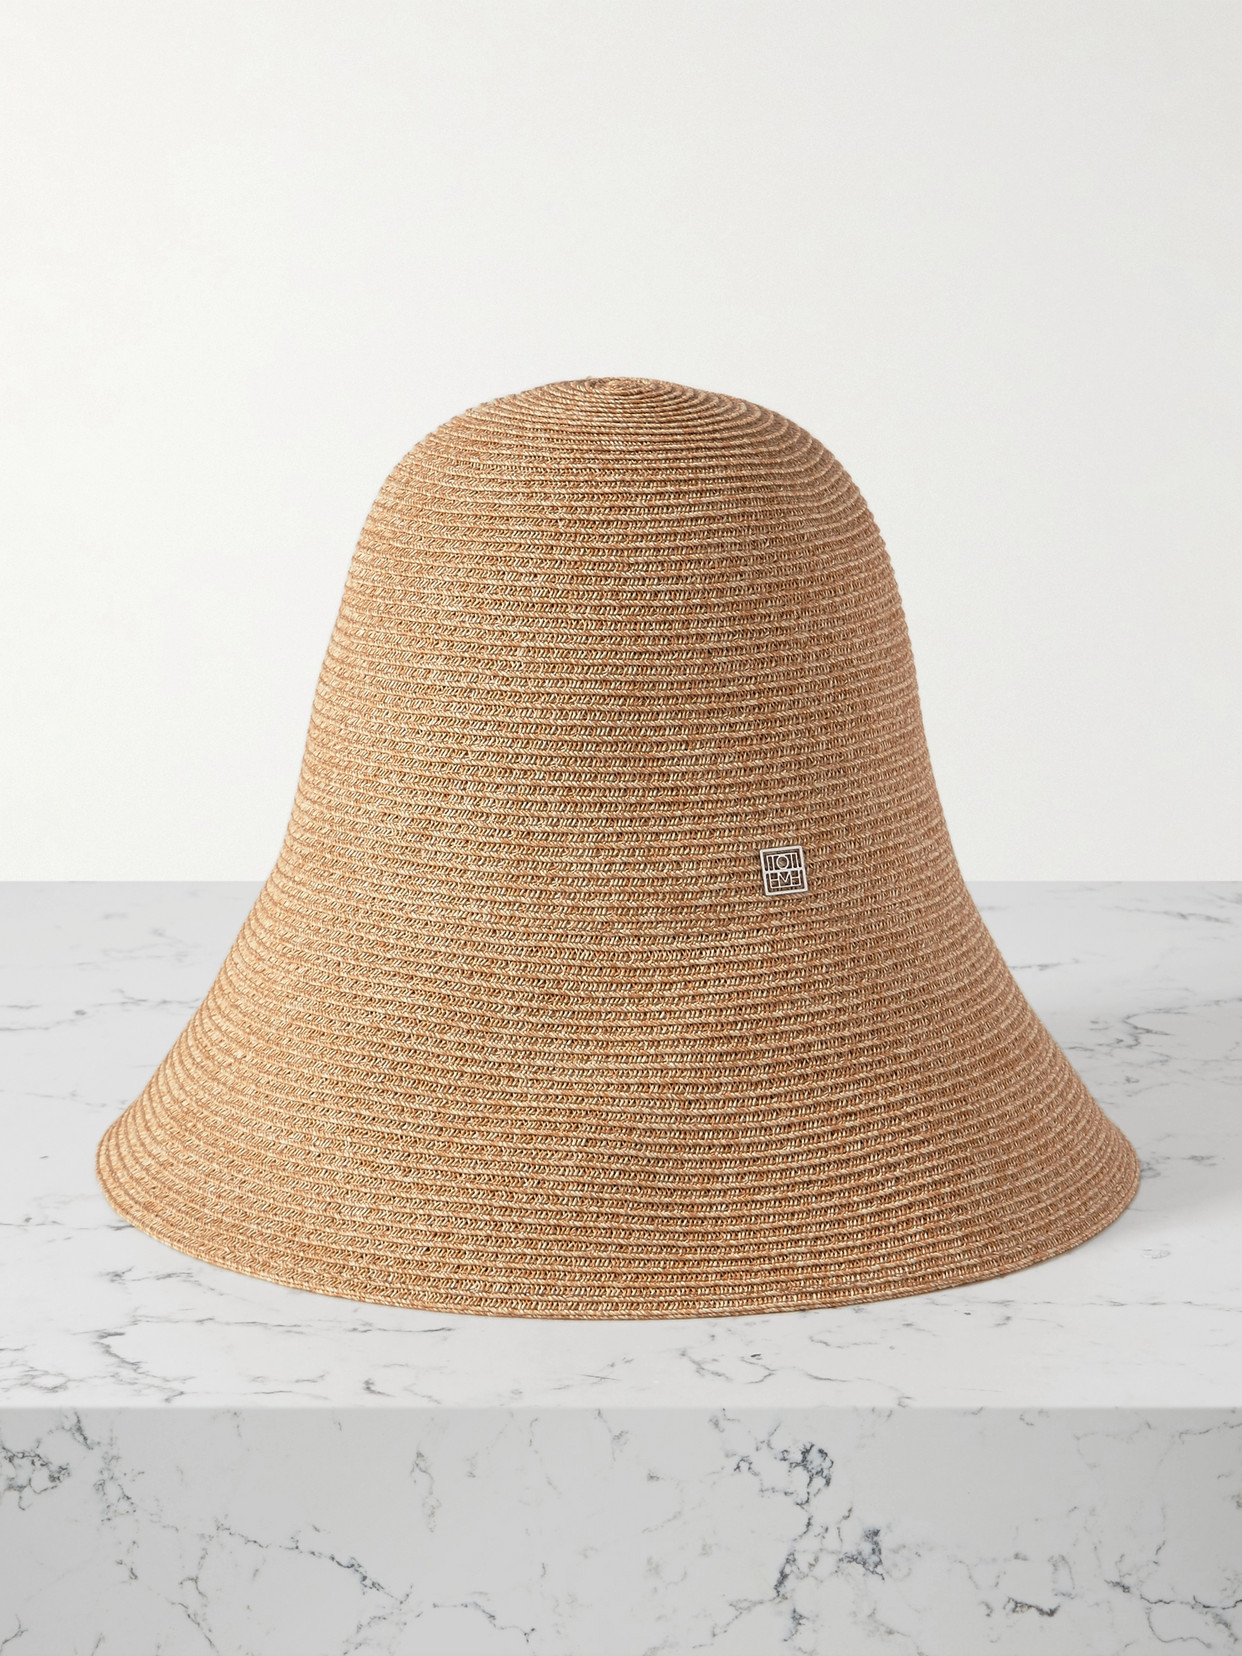 Embellished Straw Bucket Hat